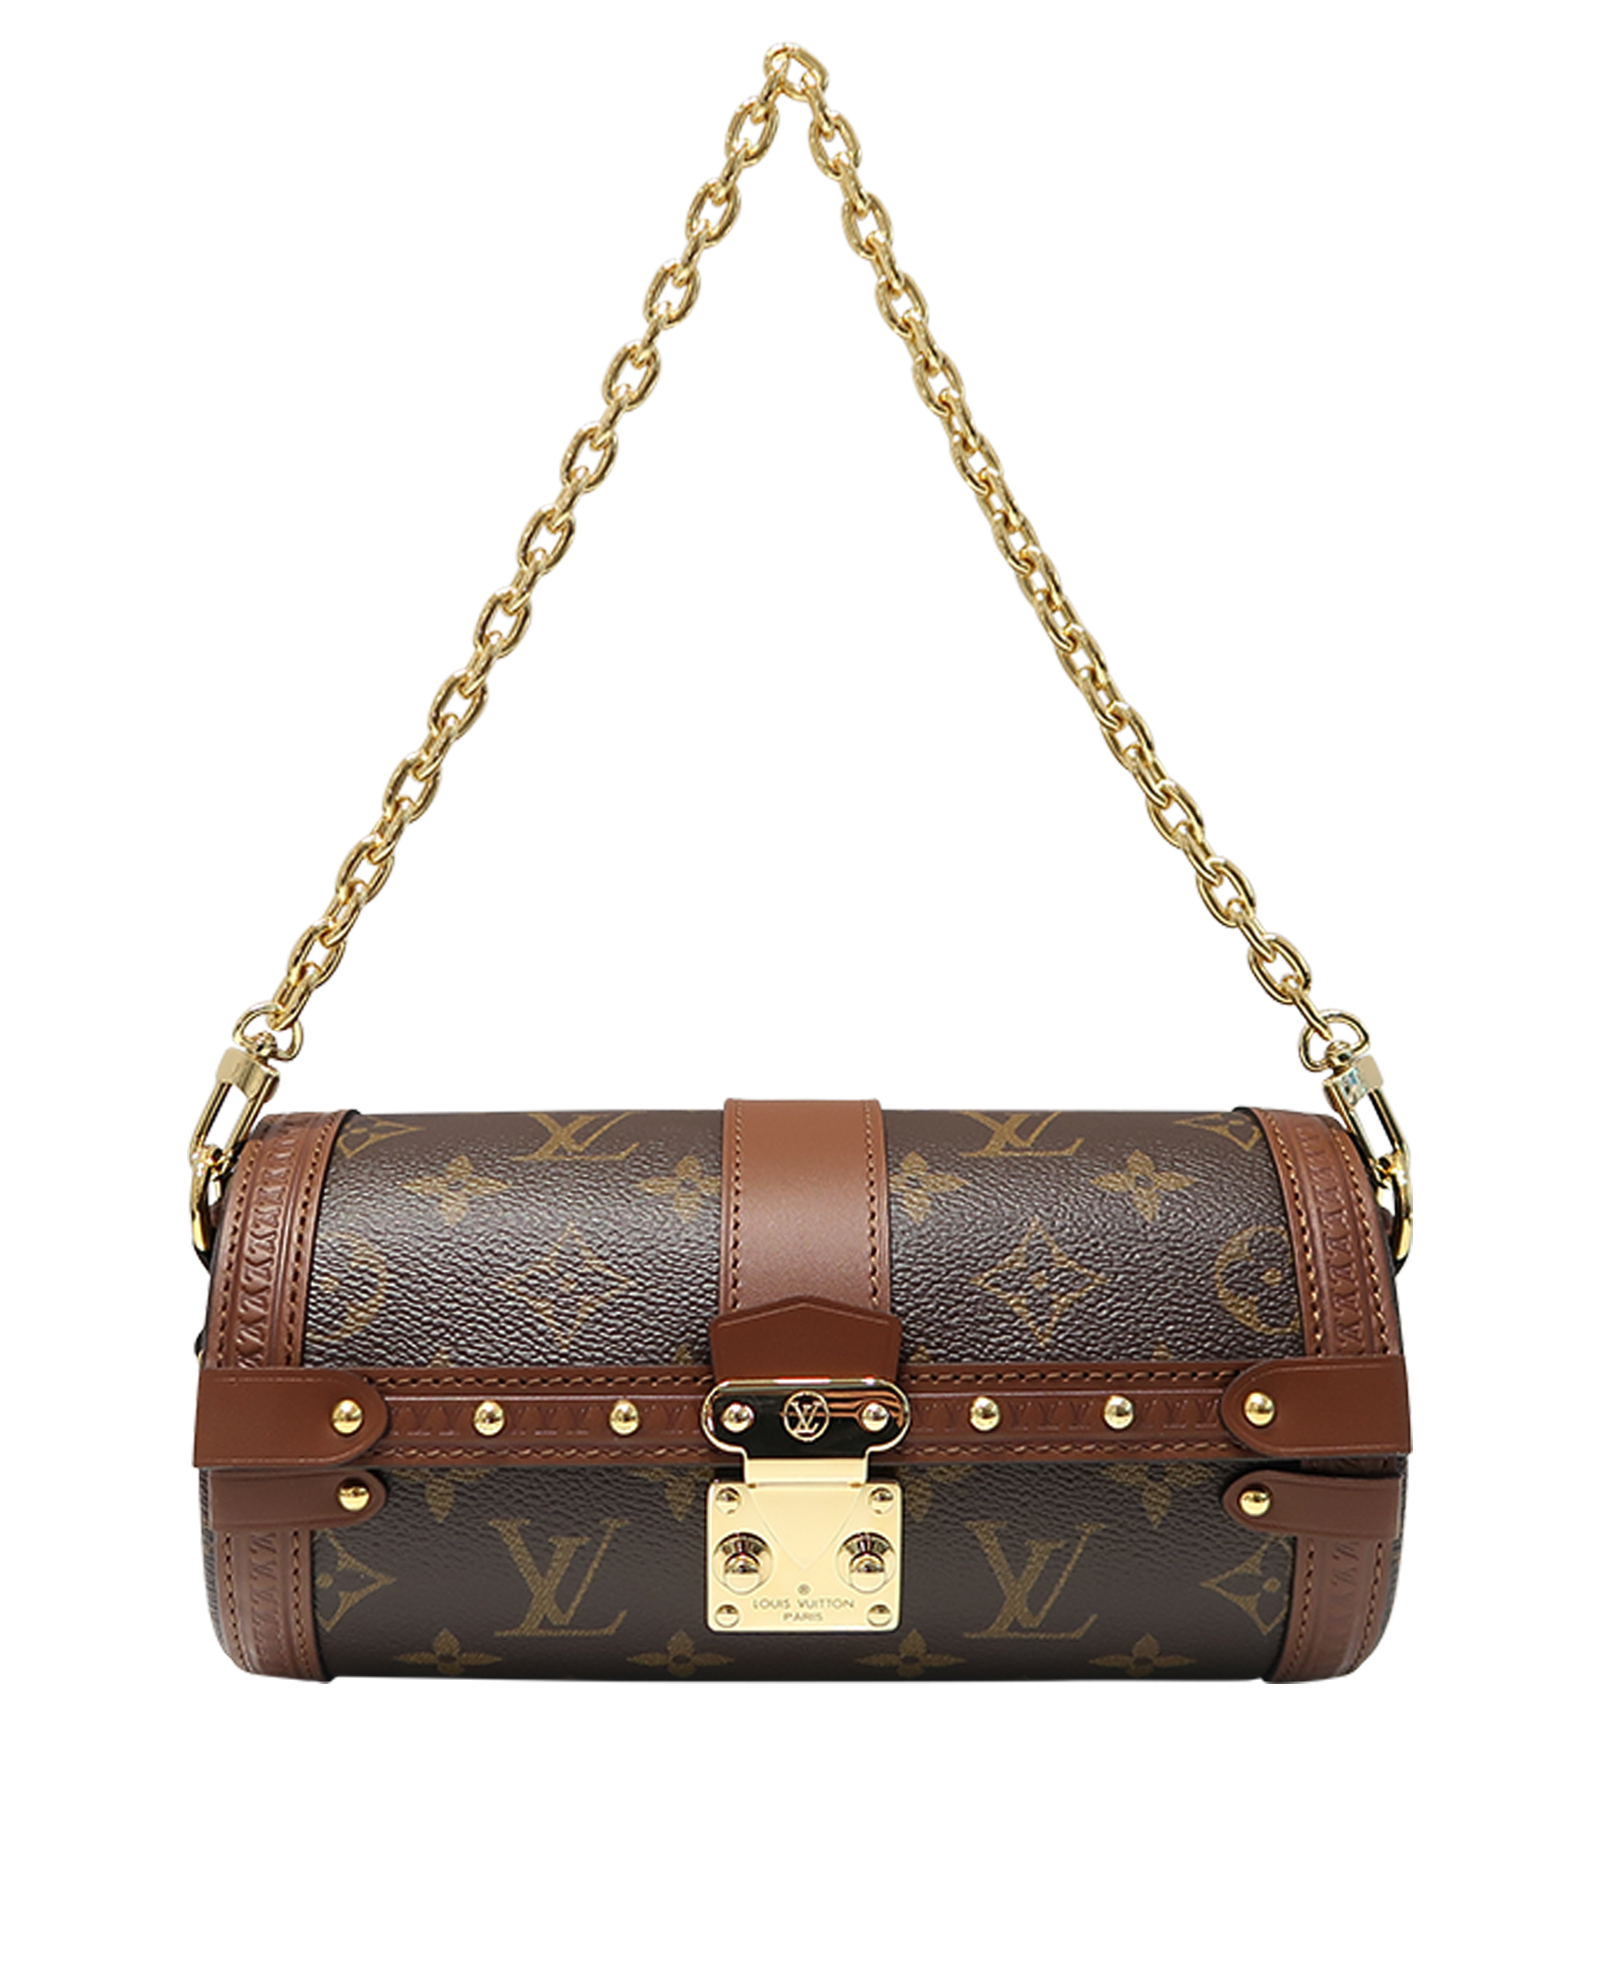 Louis Vuitton - Authenticated Papillon Trunk Handbag - Leather Brown for Women, Never Worn